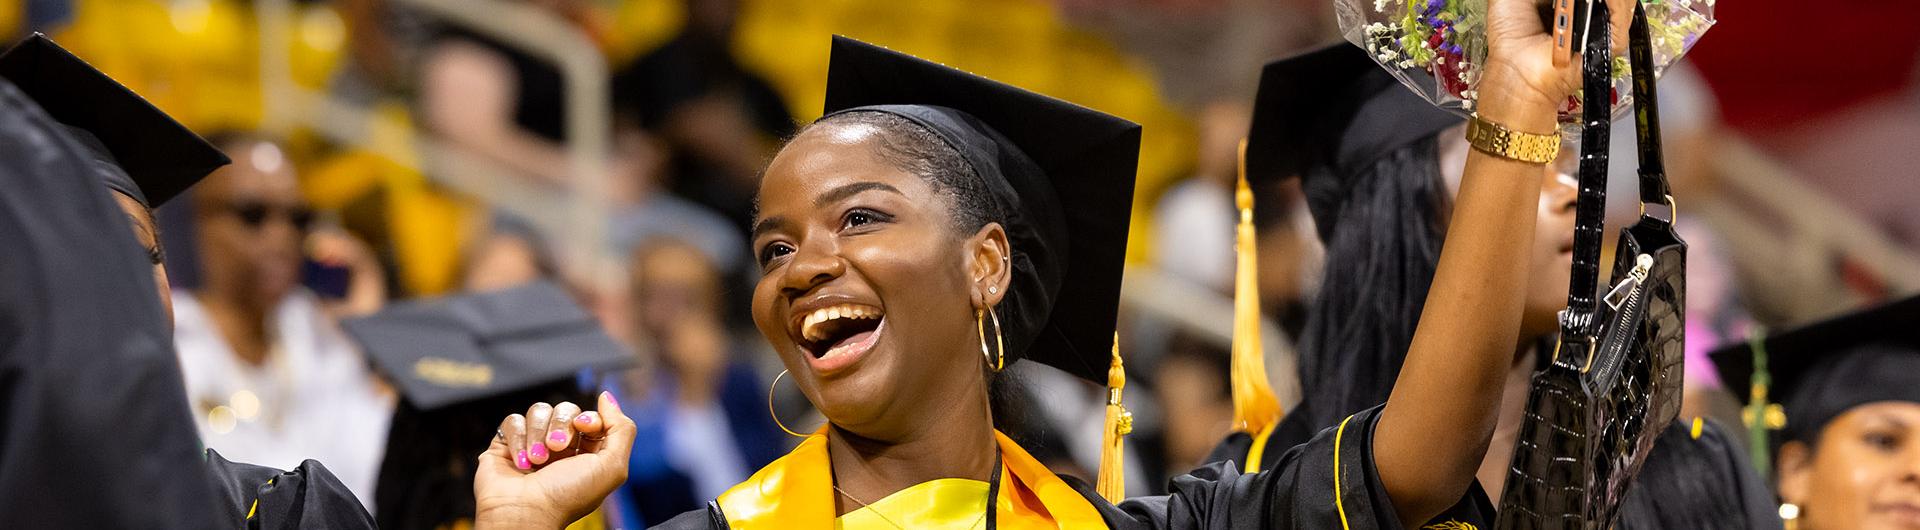 Black woman graduate